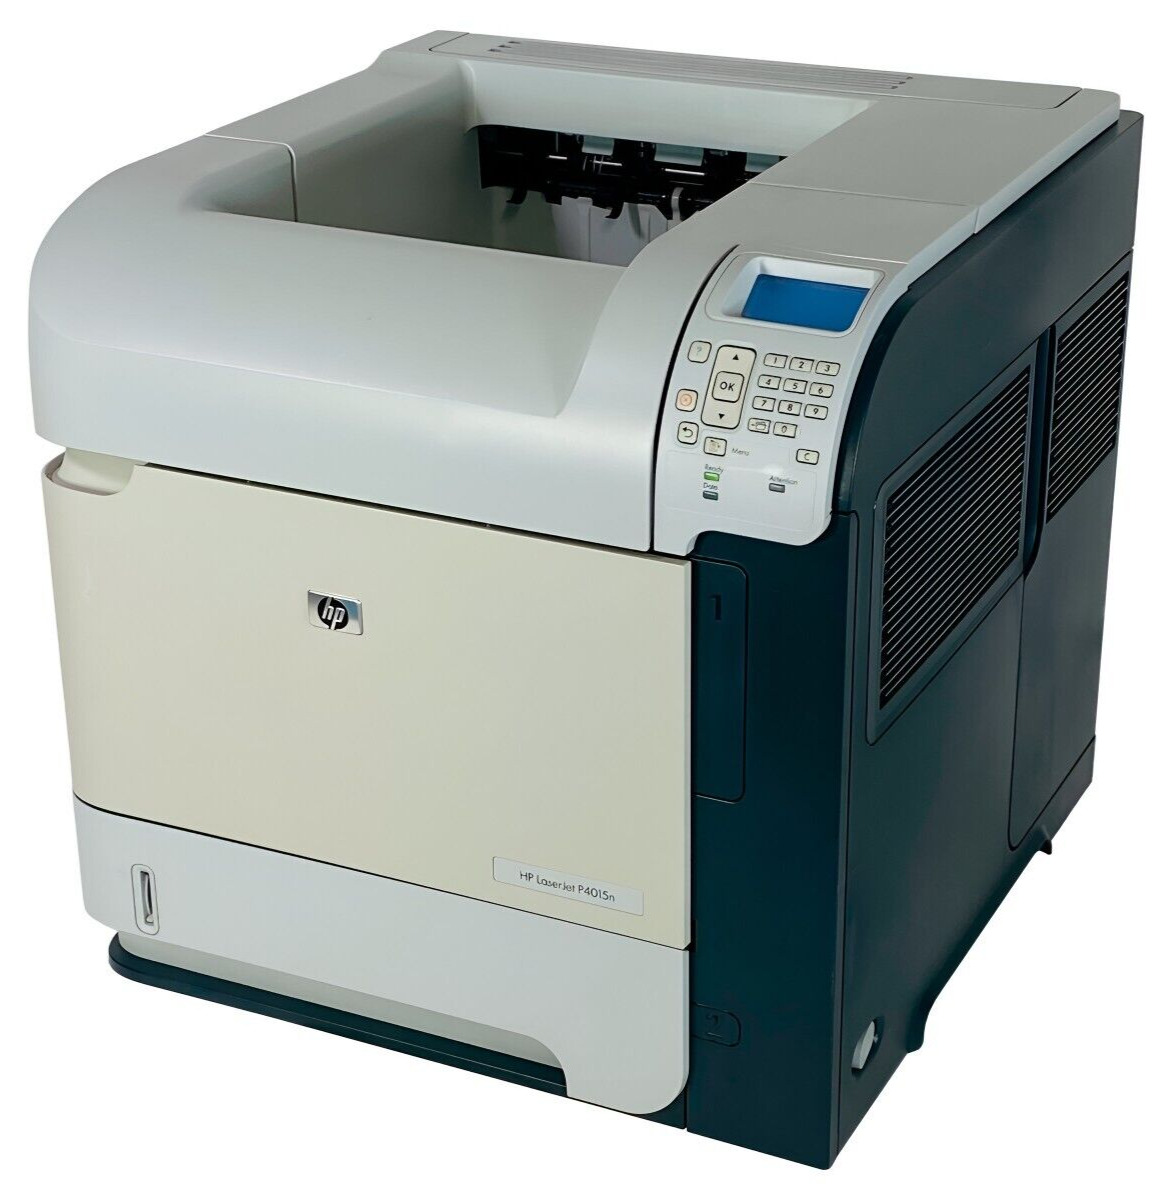 TESTED HP LaserJet 4015n Duplex Network B&W Laser Printer CB509A with Toner